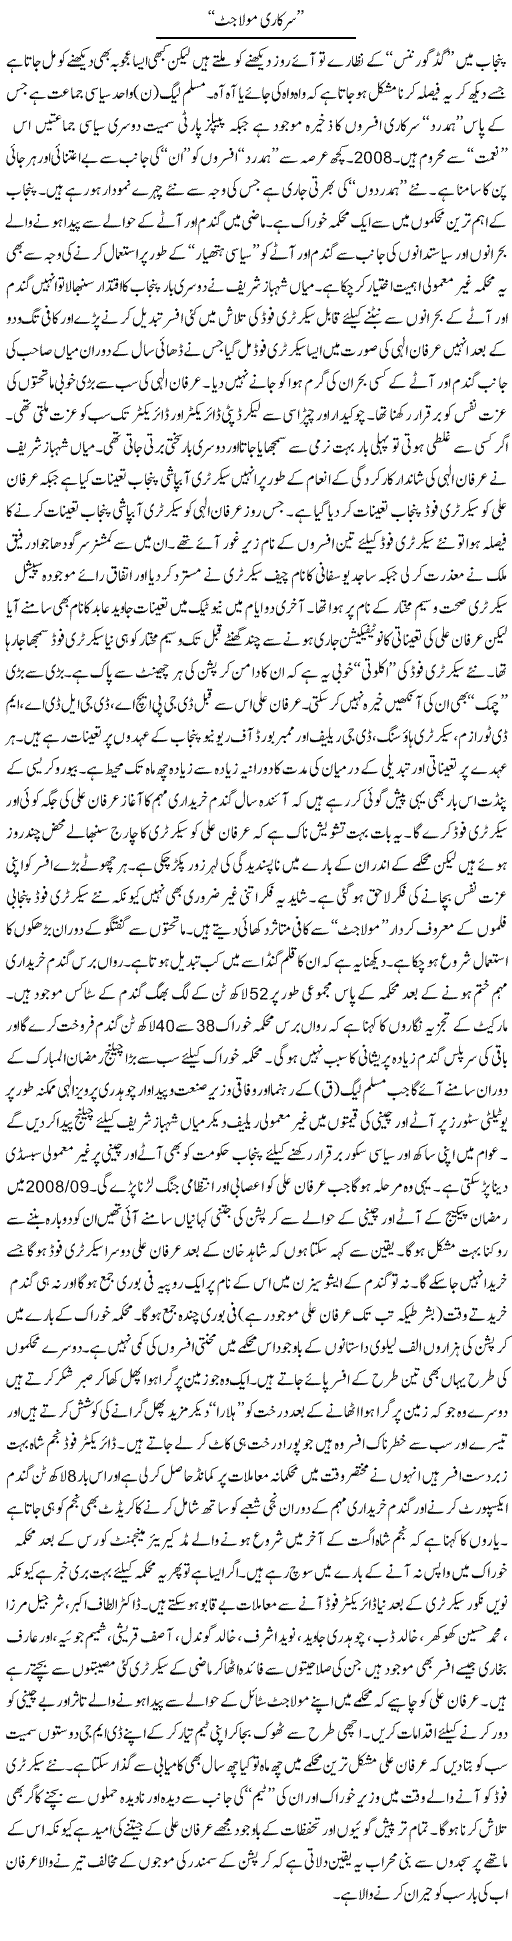 Story of Punjab Express Column Rizwan Asif 20 June 2011